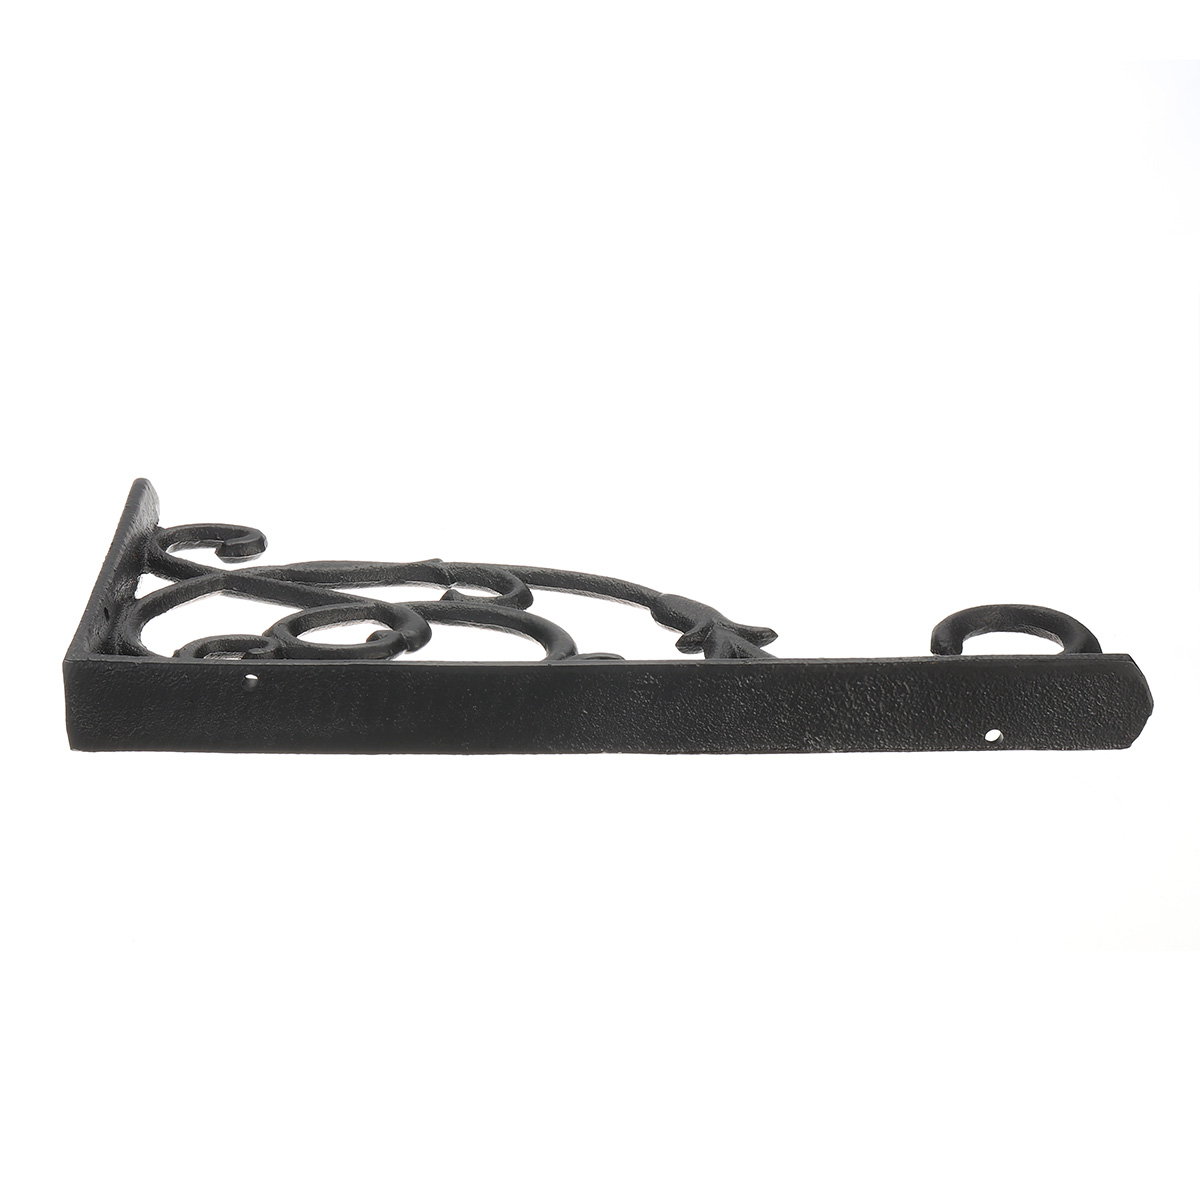 Rustic-Cast-Iron-Shelf-Wall-Bracket-Support-Industrial-Antique-1661499